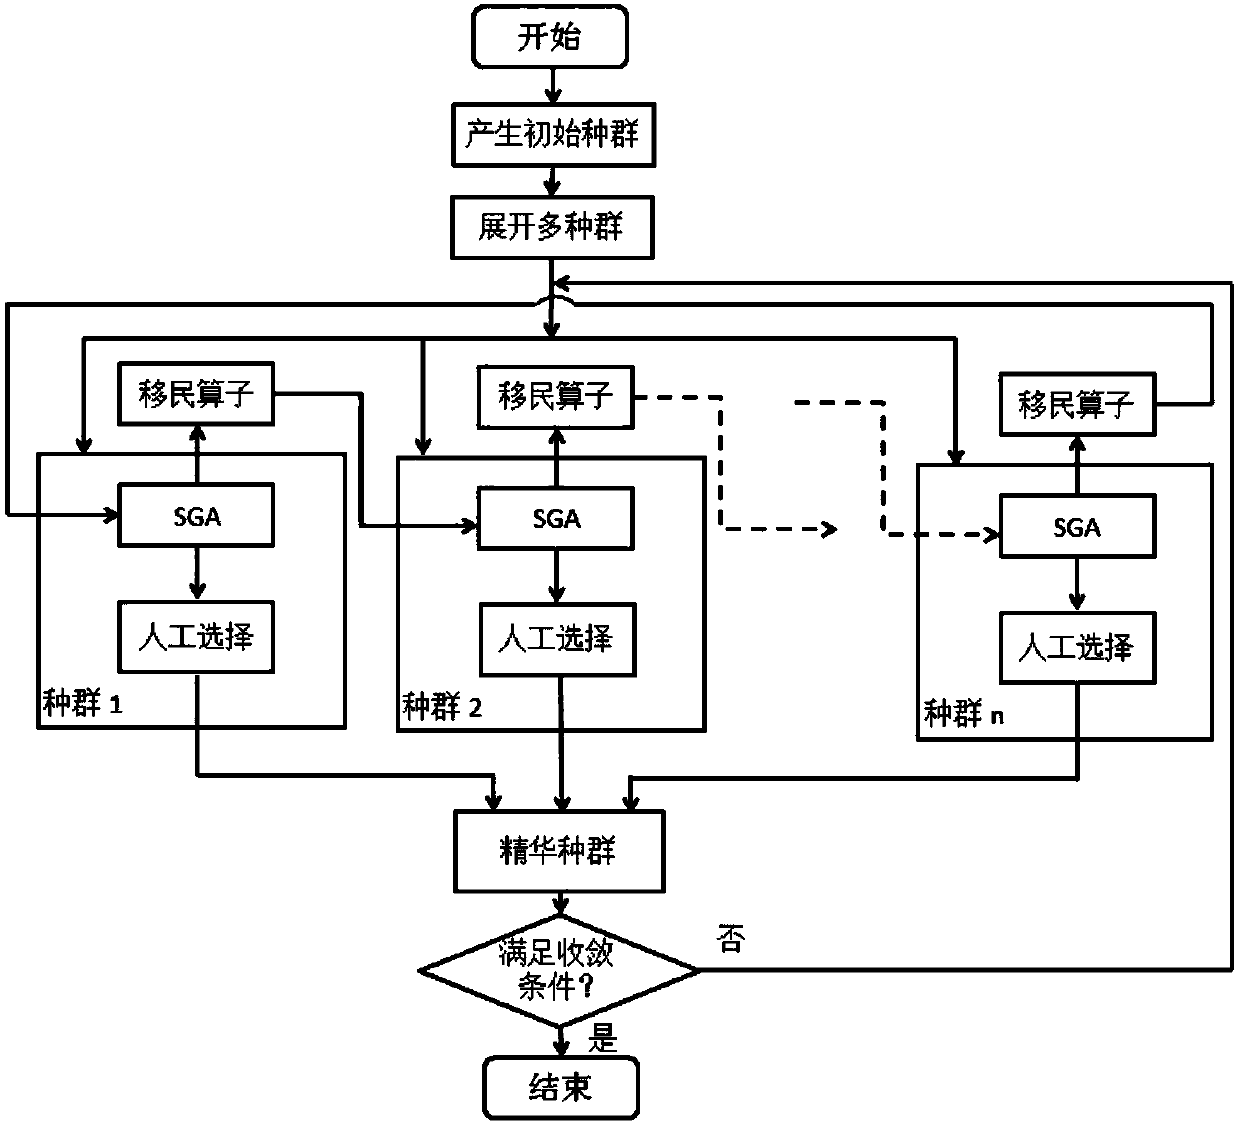 Multi-population genetic algorithm-based power distribution network fault section location algorithm